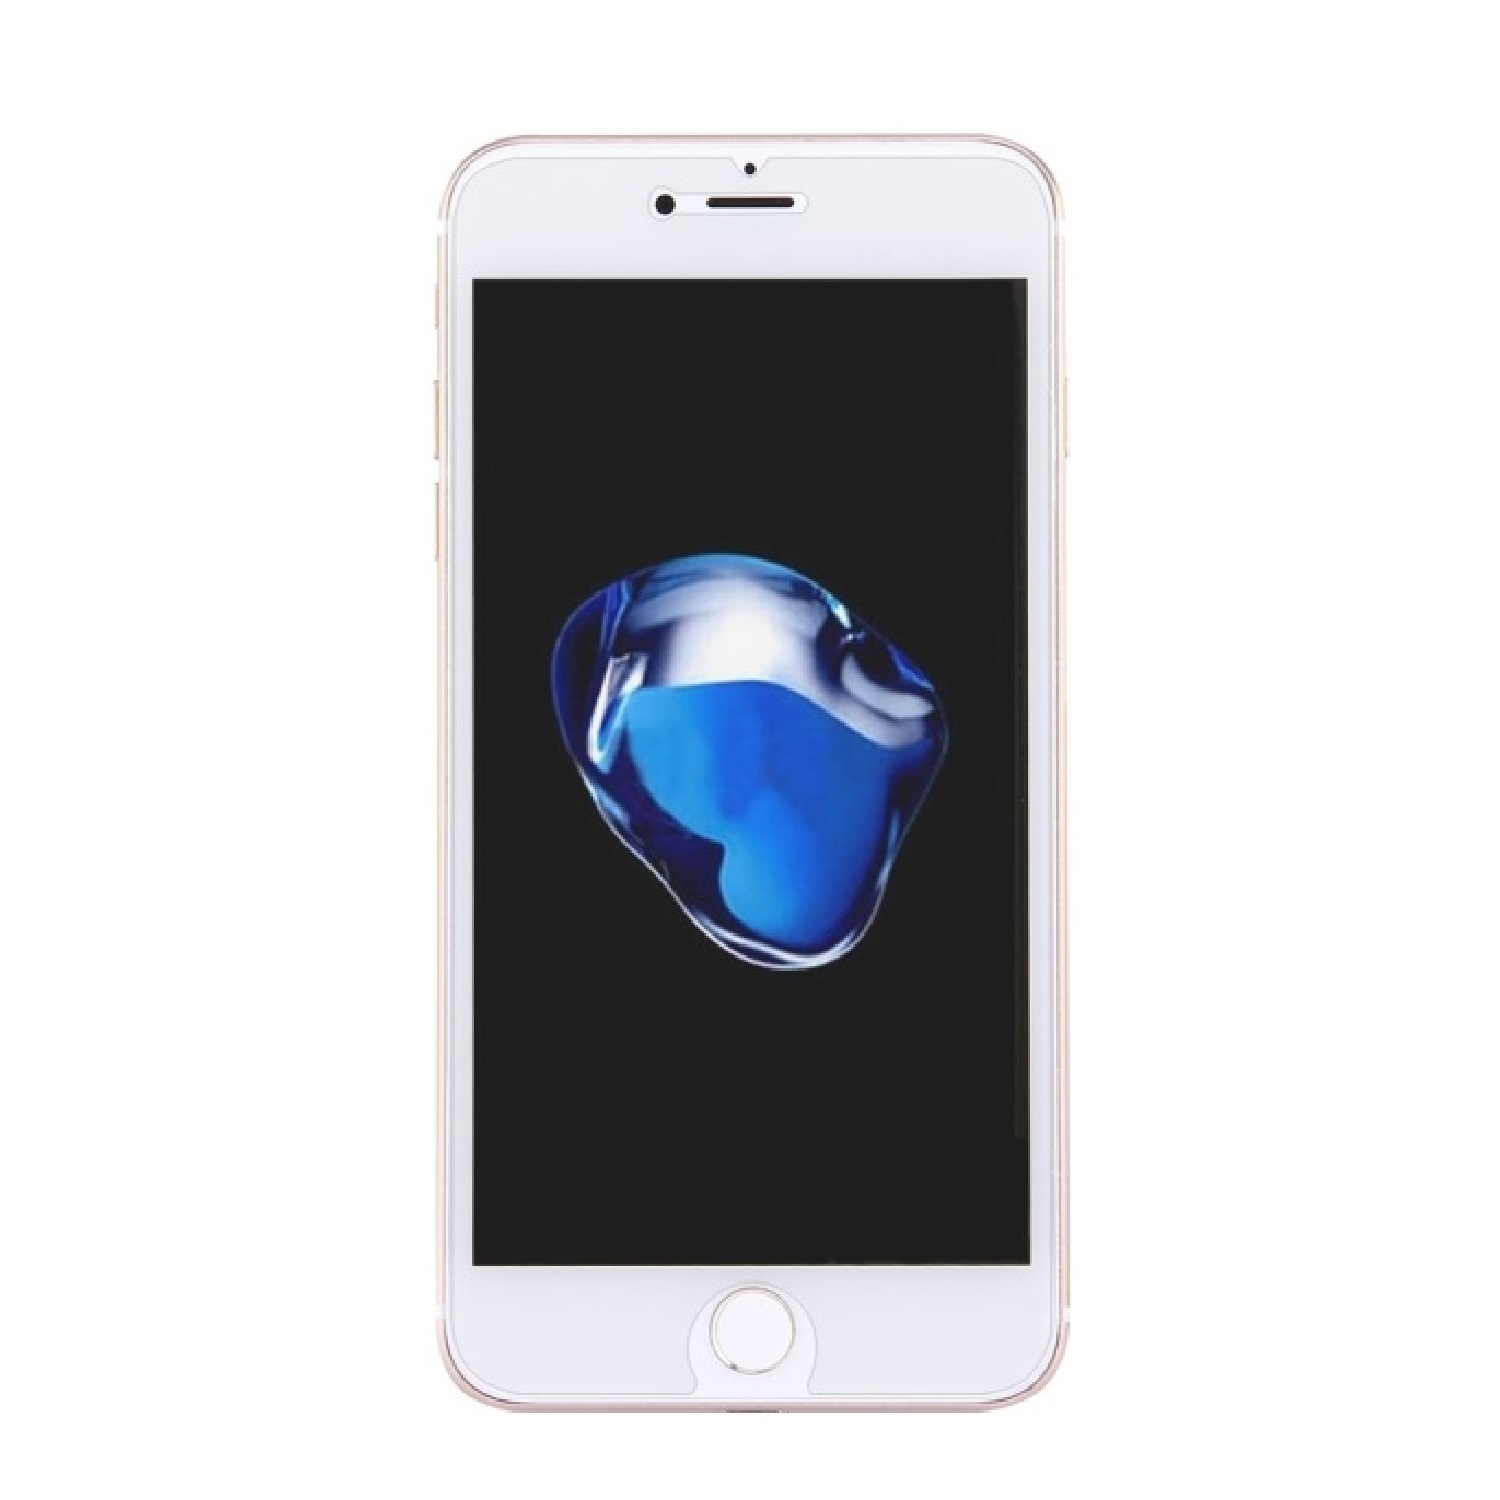 Apple 9H iPhone Plus) 2x Displayschutzfolie(für HD Schutzglas 8 Hartglas PROTECTORKING KLAR